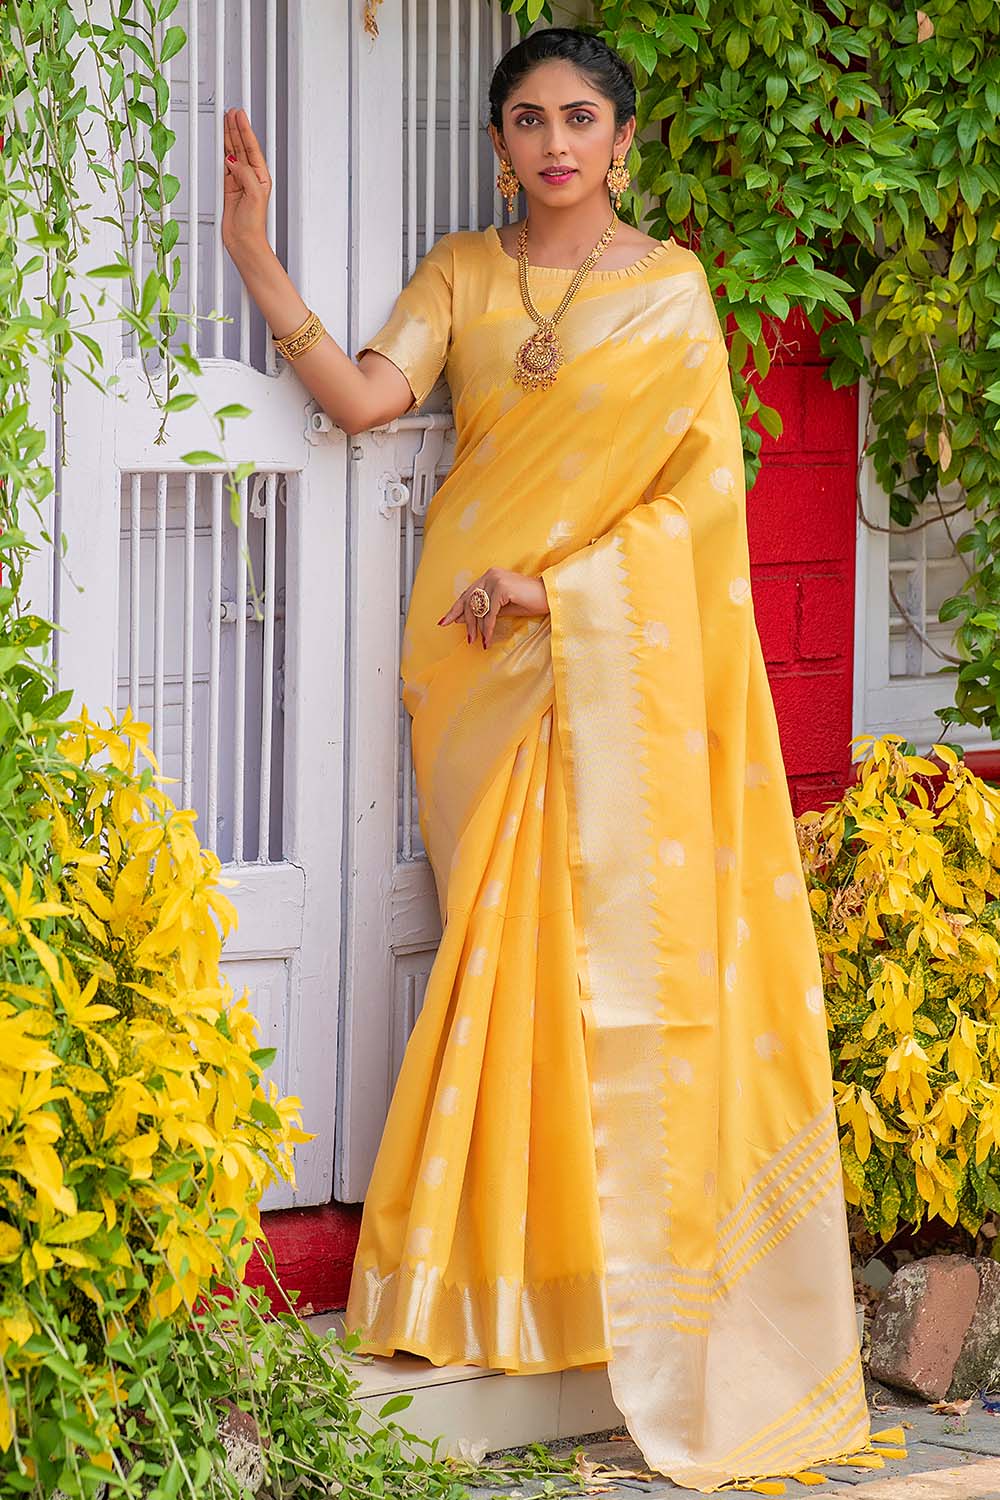 Buy Banarasi Silk Saree Women's kanchi Pattu kanchipuram Pure Soft with  Blouse Piece (yellow Colour) at Amazon.in